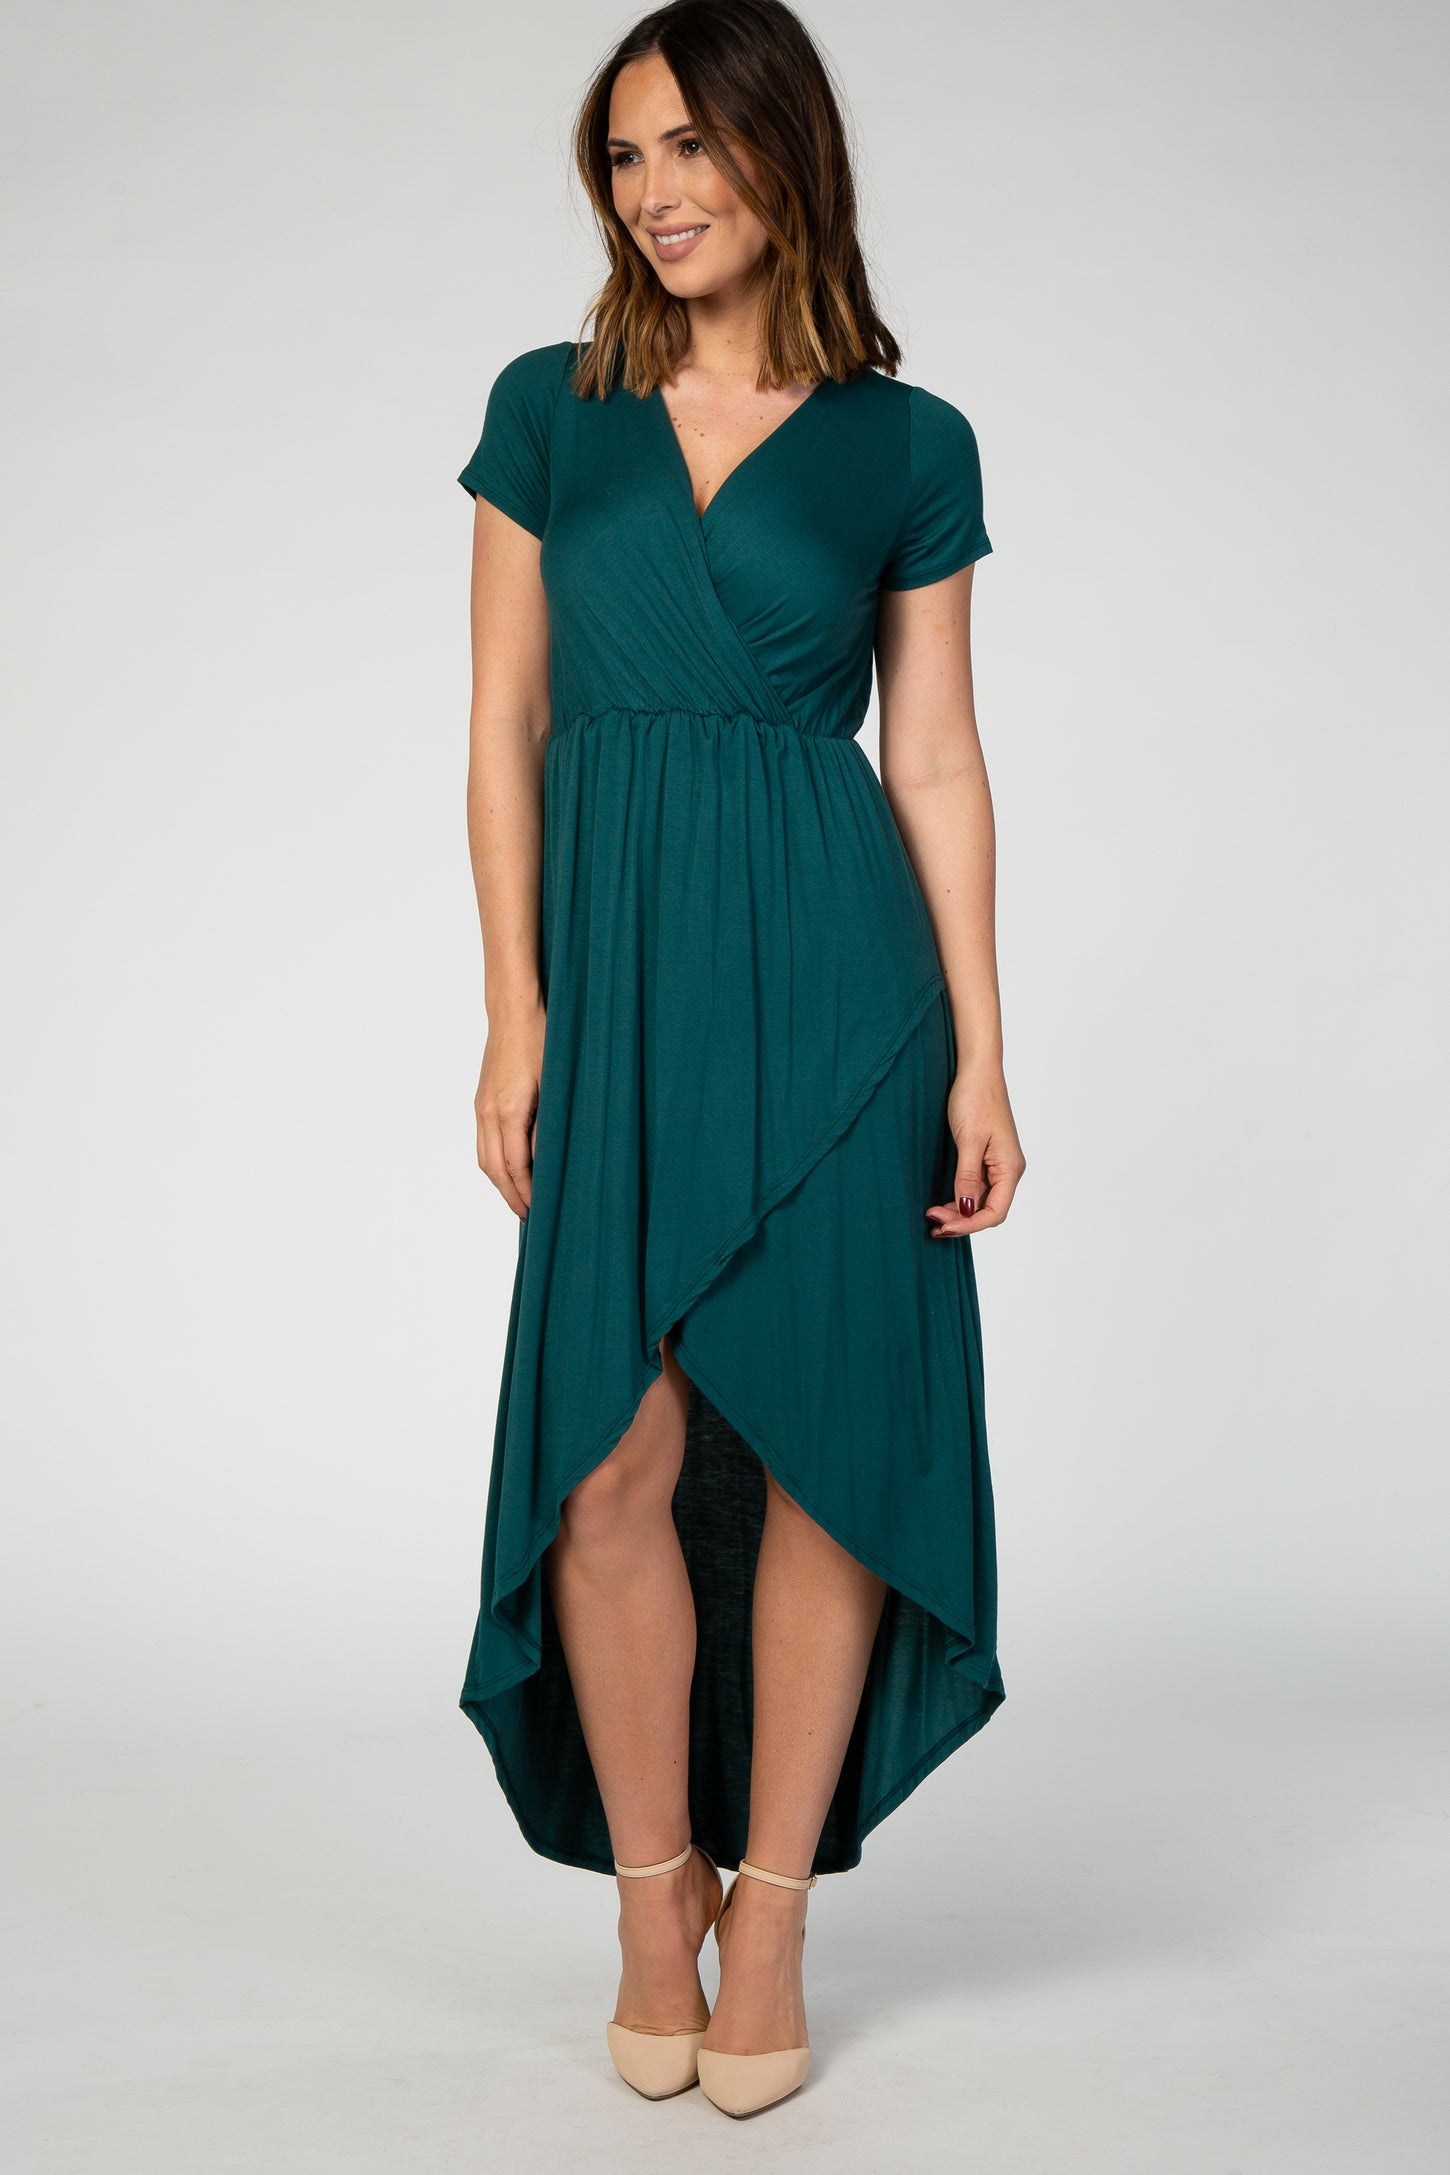 Forest Green Hi-Low Hem Maternity Wrap Maxi Dress